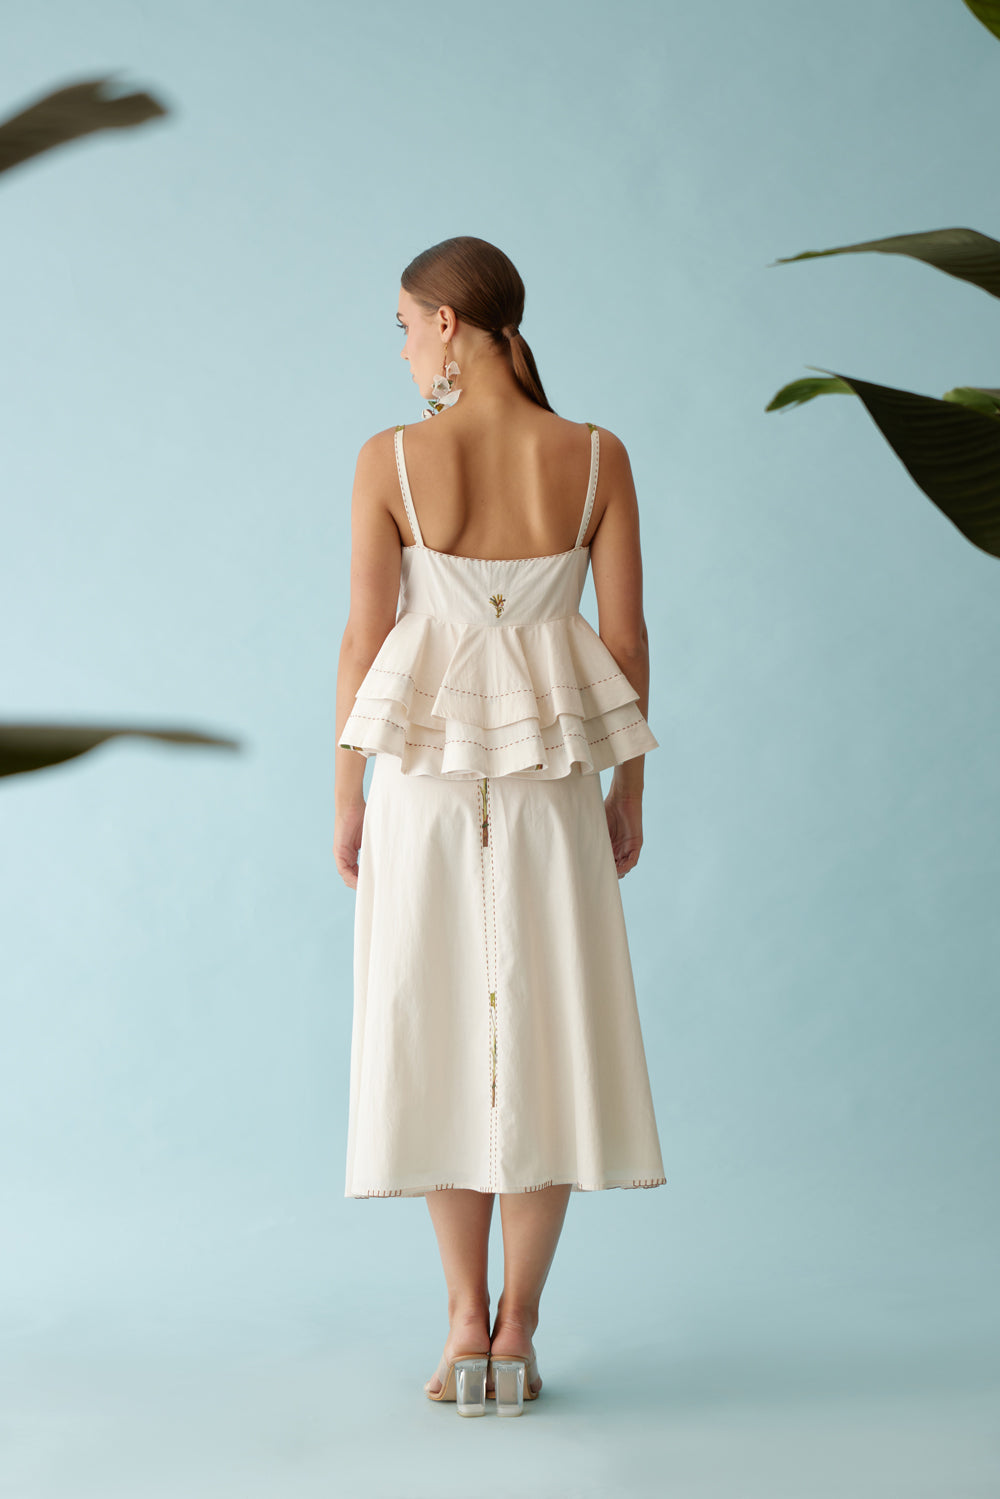 Cream A-Line Skirt